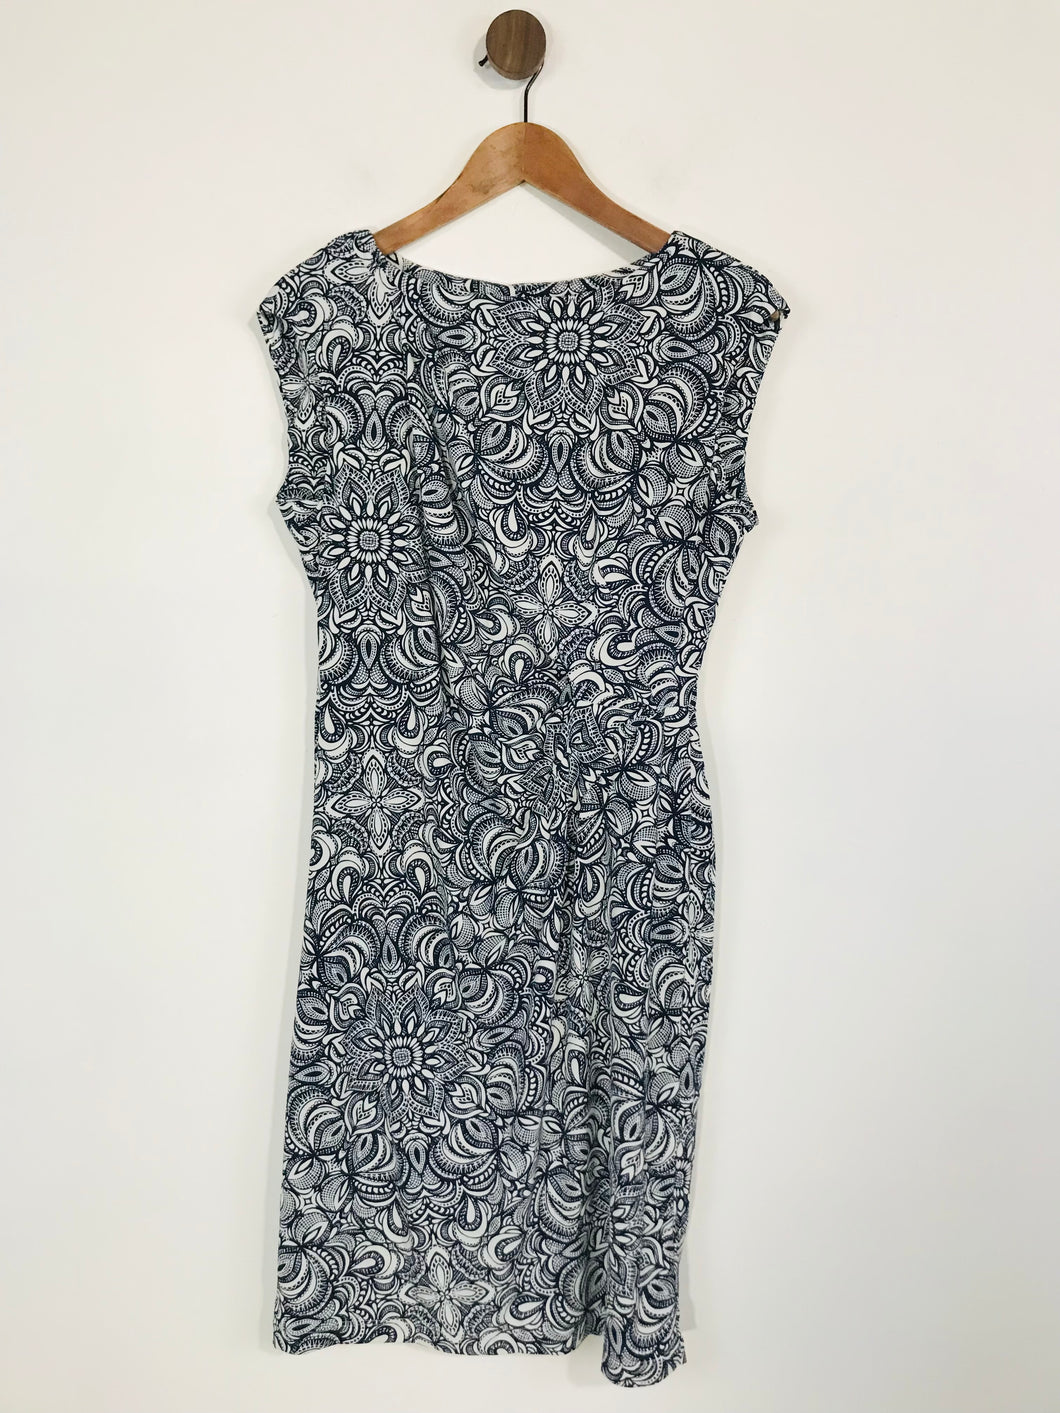 TM Lewin Women's Ruched Patterned Shift Dress | M UK10-12 | Blue